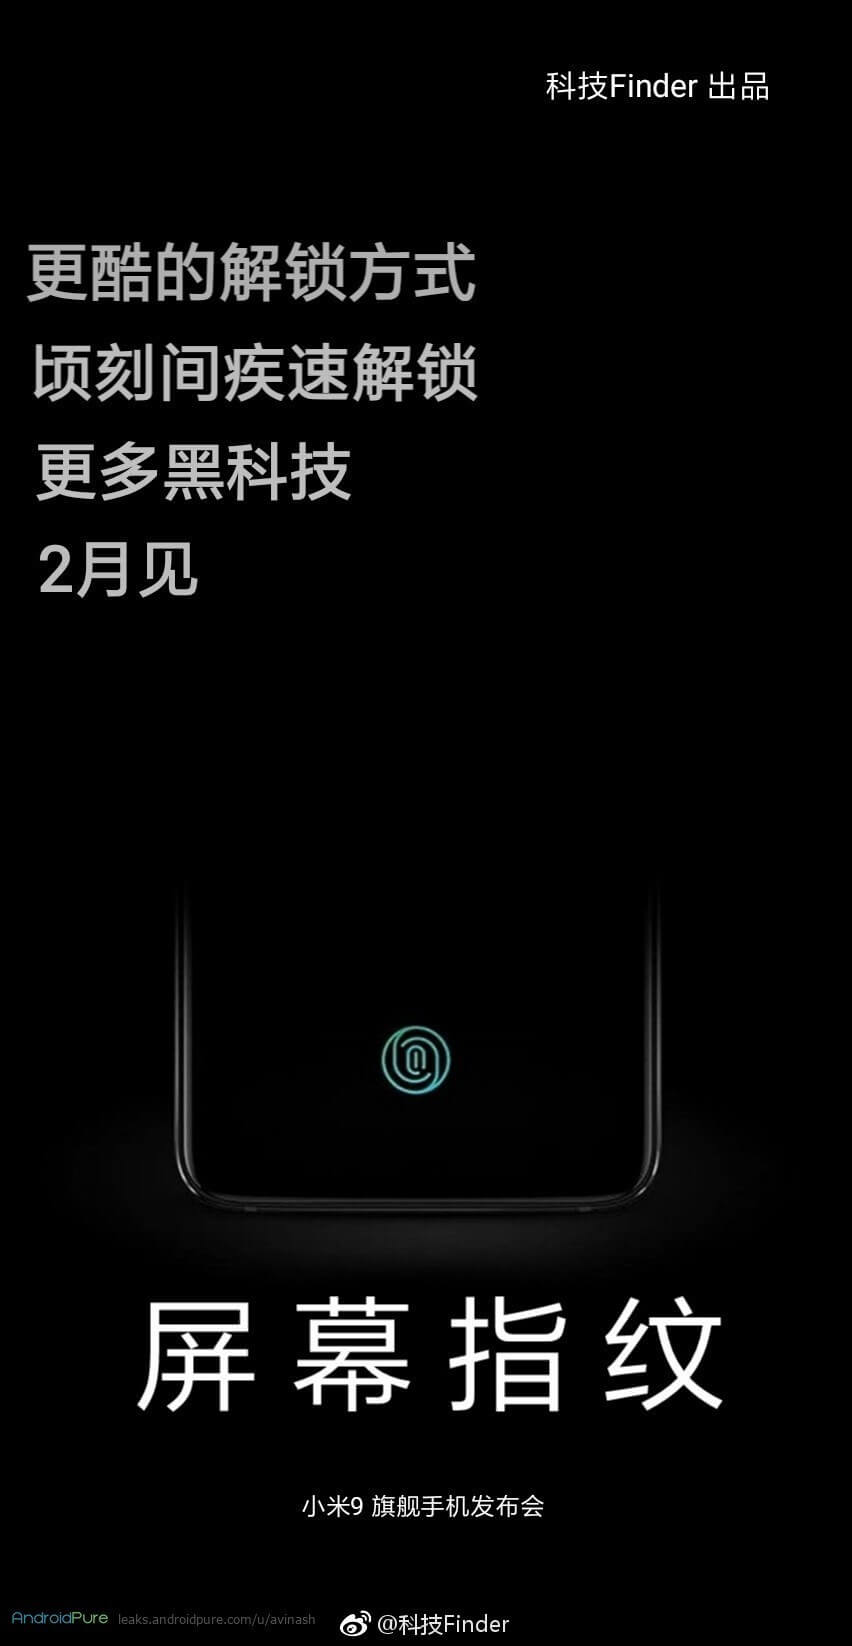 Xiaomi Mi 9 тизер